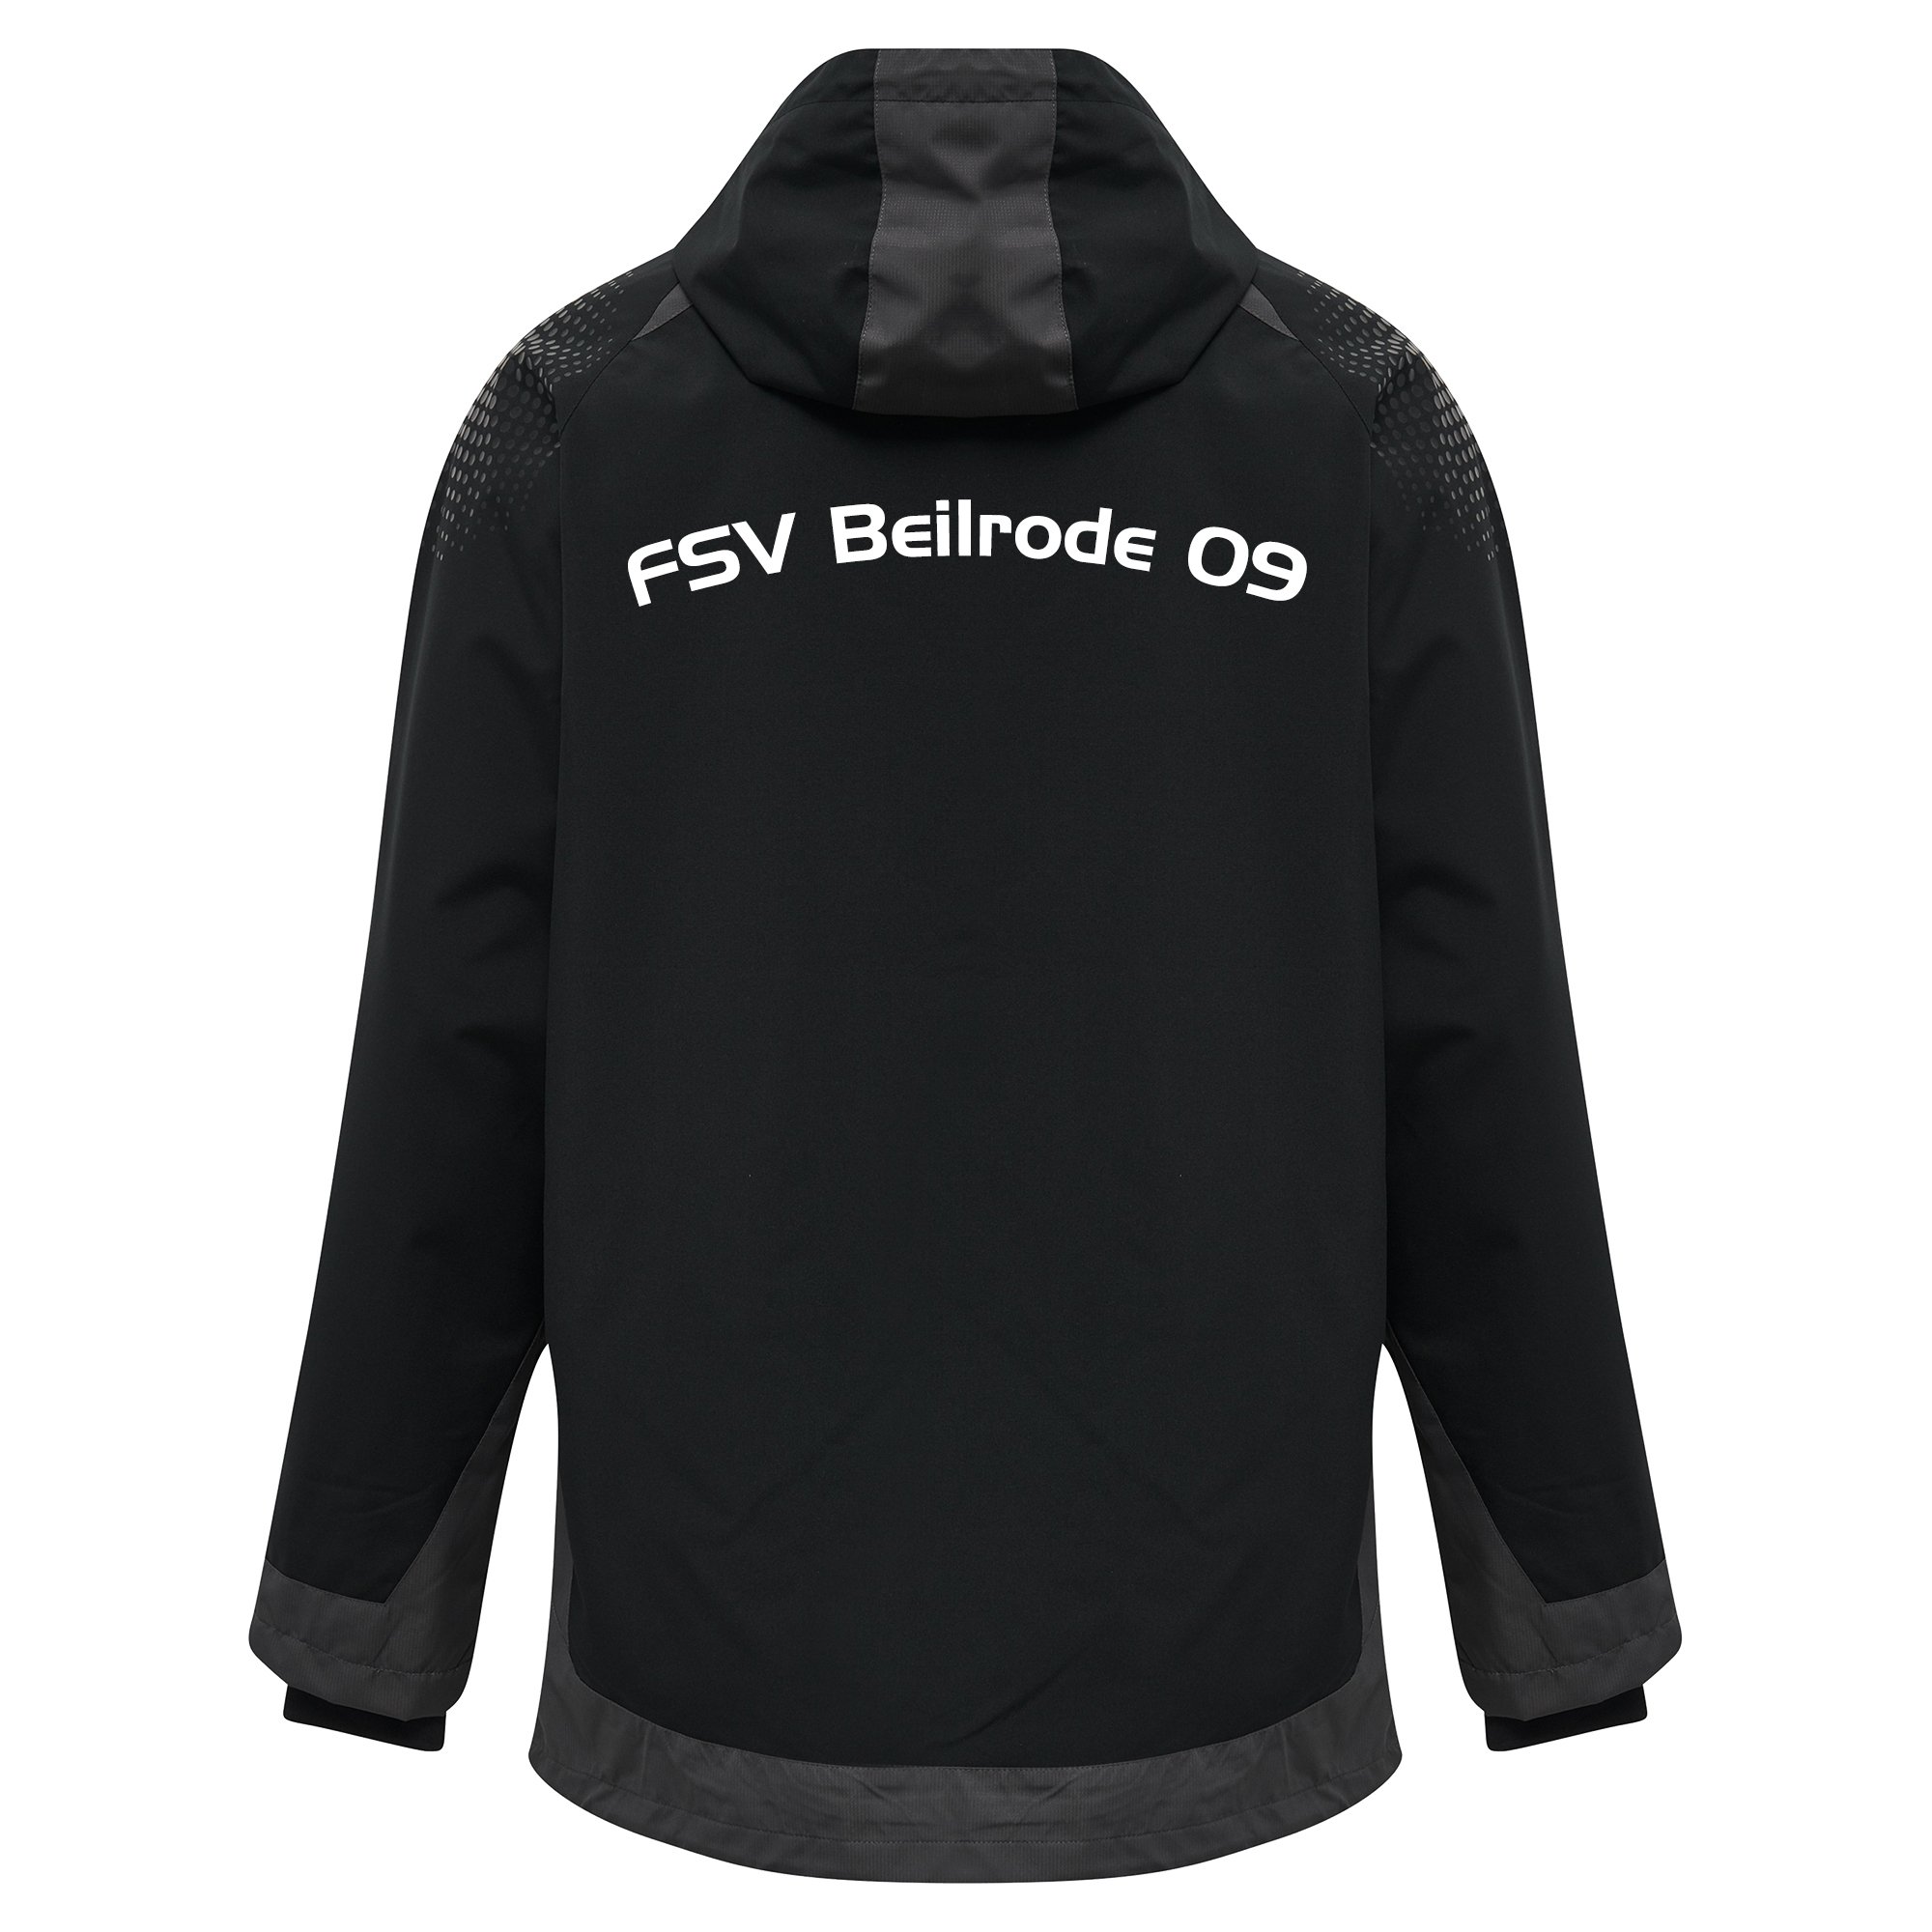 FSV Beilrode 09 All-Weather Jacket